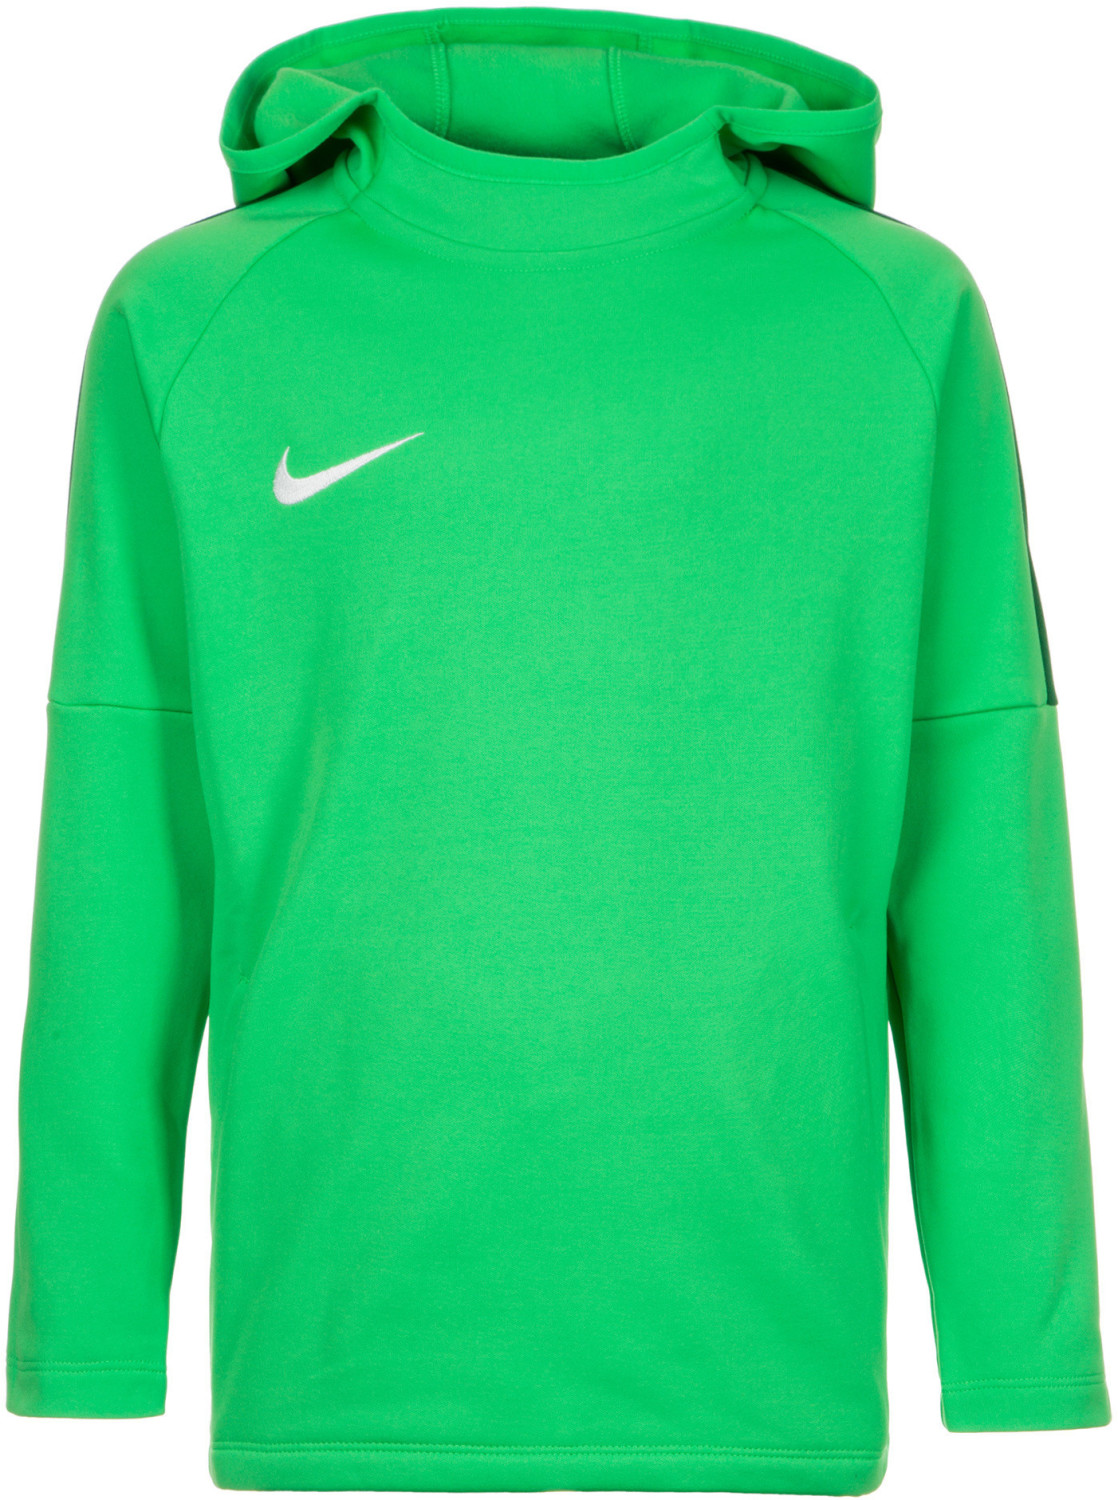 Nike Academy 18 (AJ0109) green spark/pine green/white